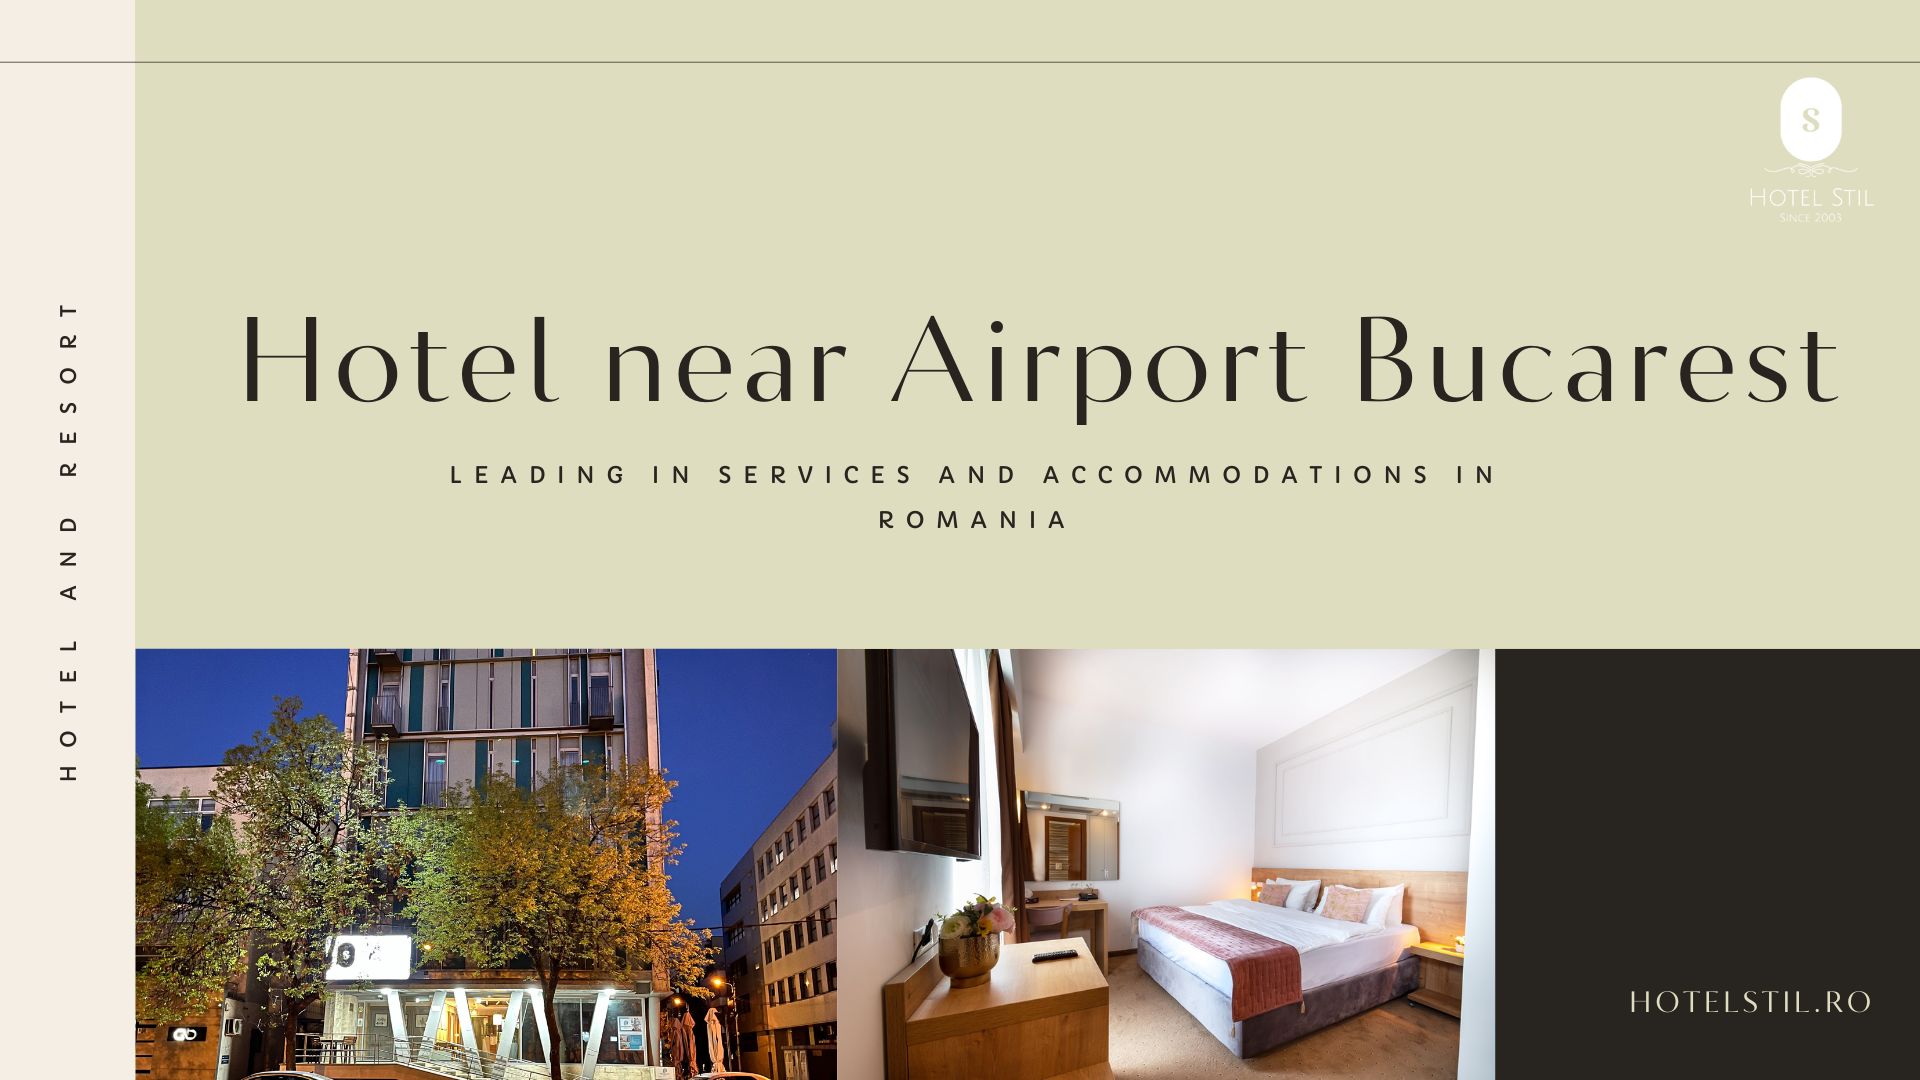 Hotel near Airport Bucarest